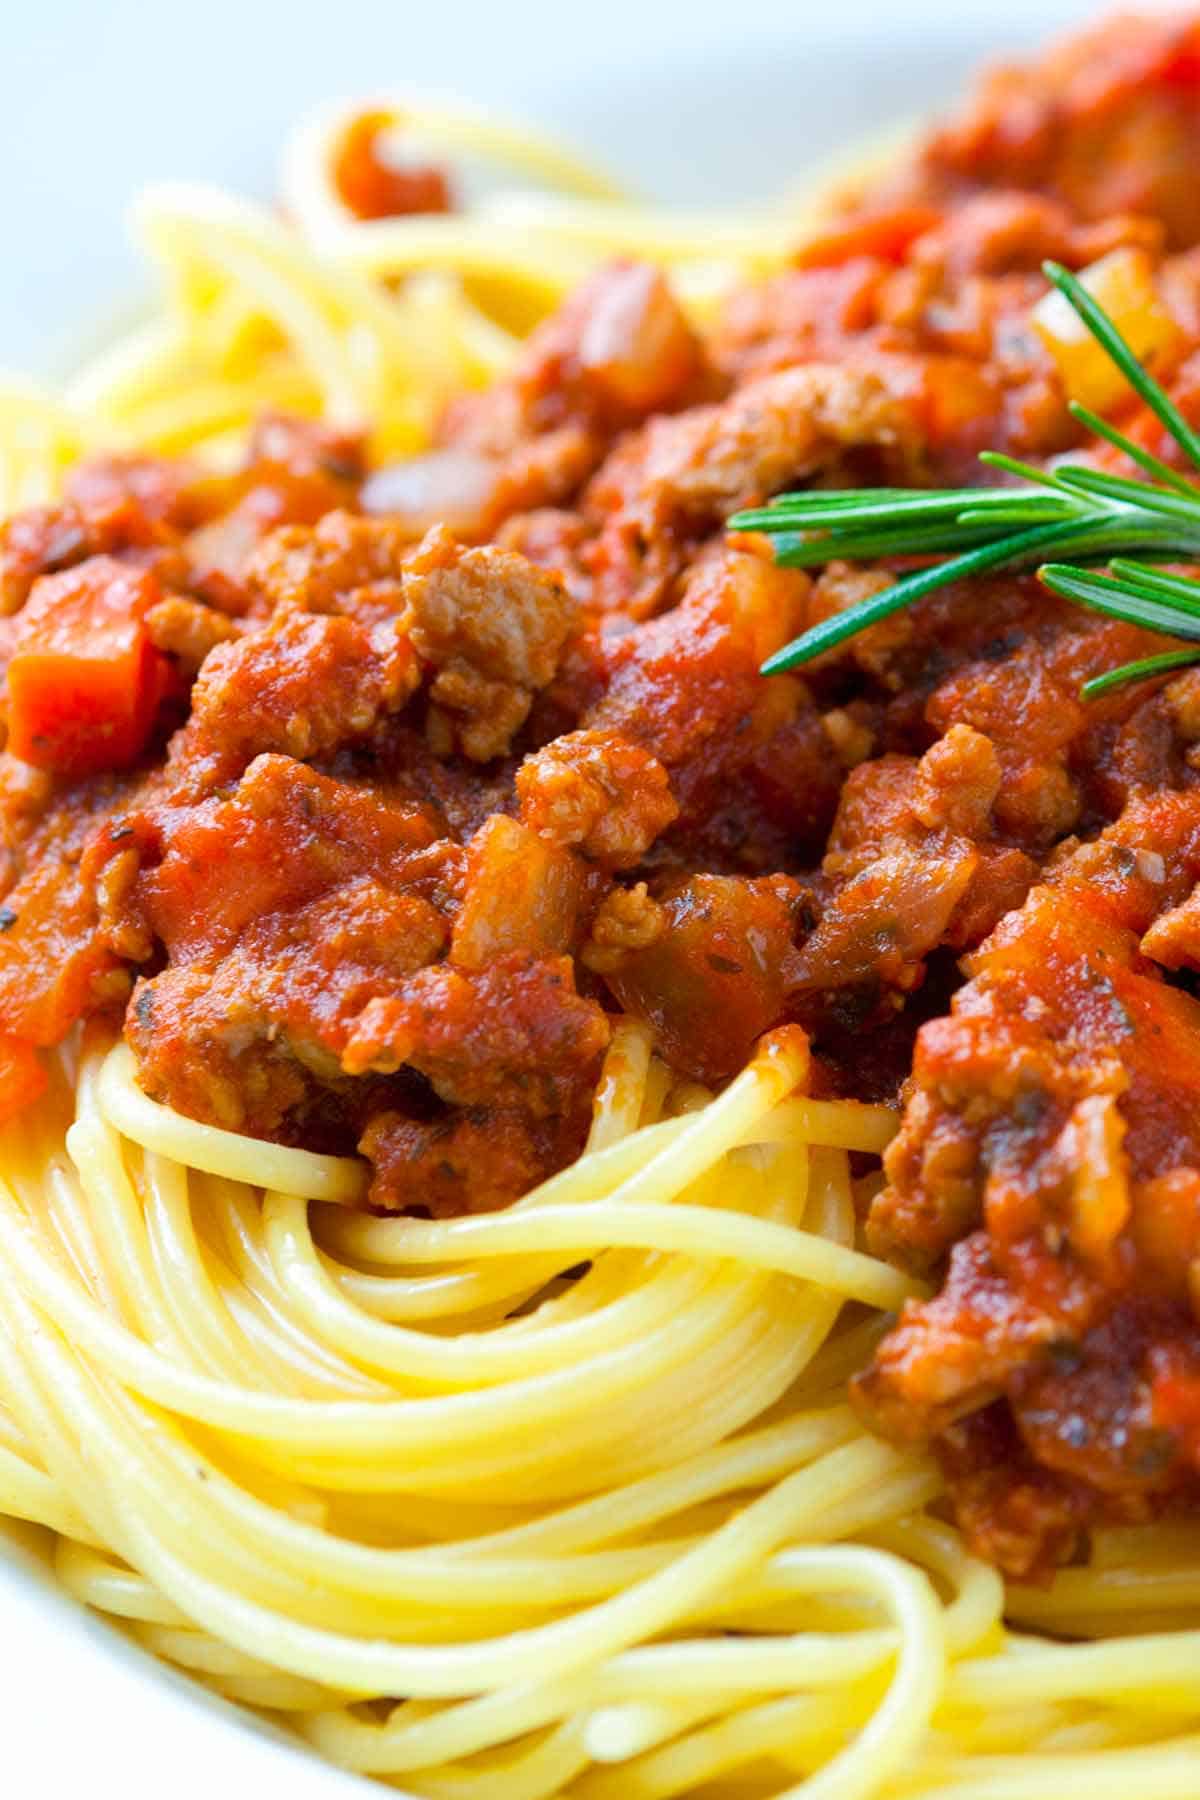 How To Make Good Spaghetti With Ragu Sauce